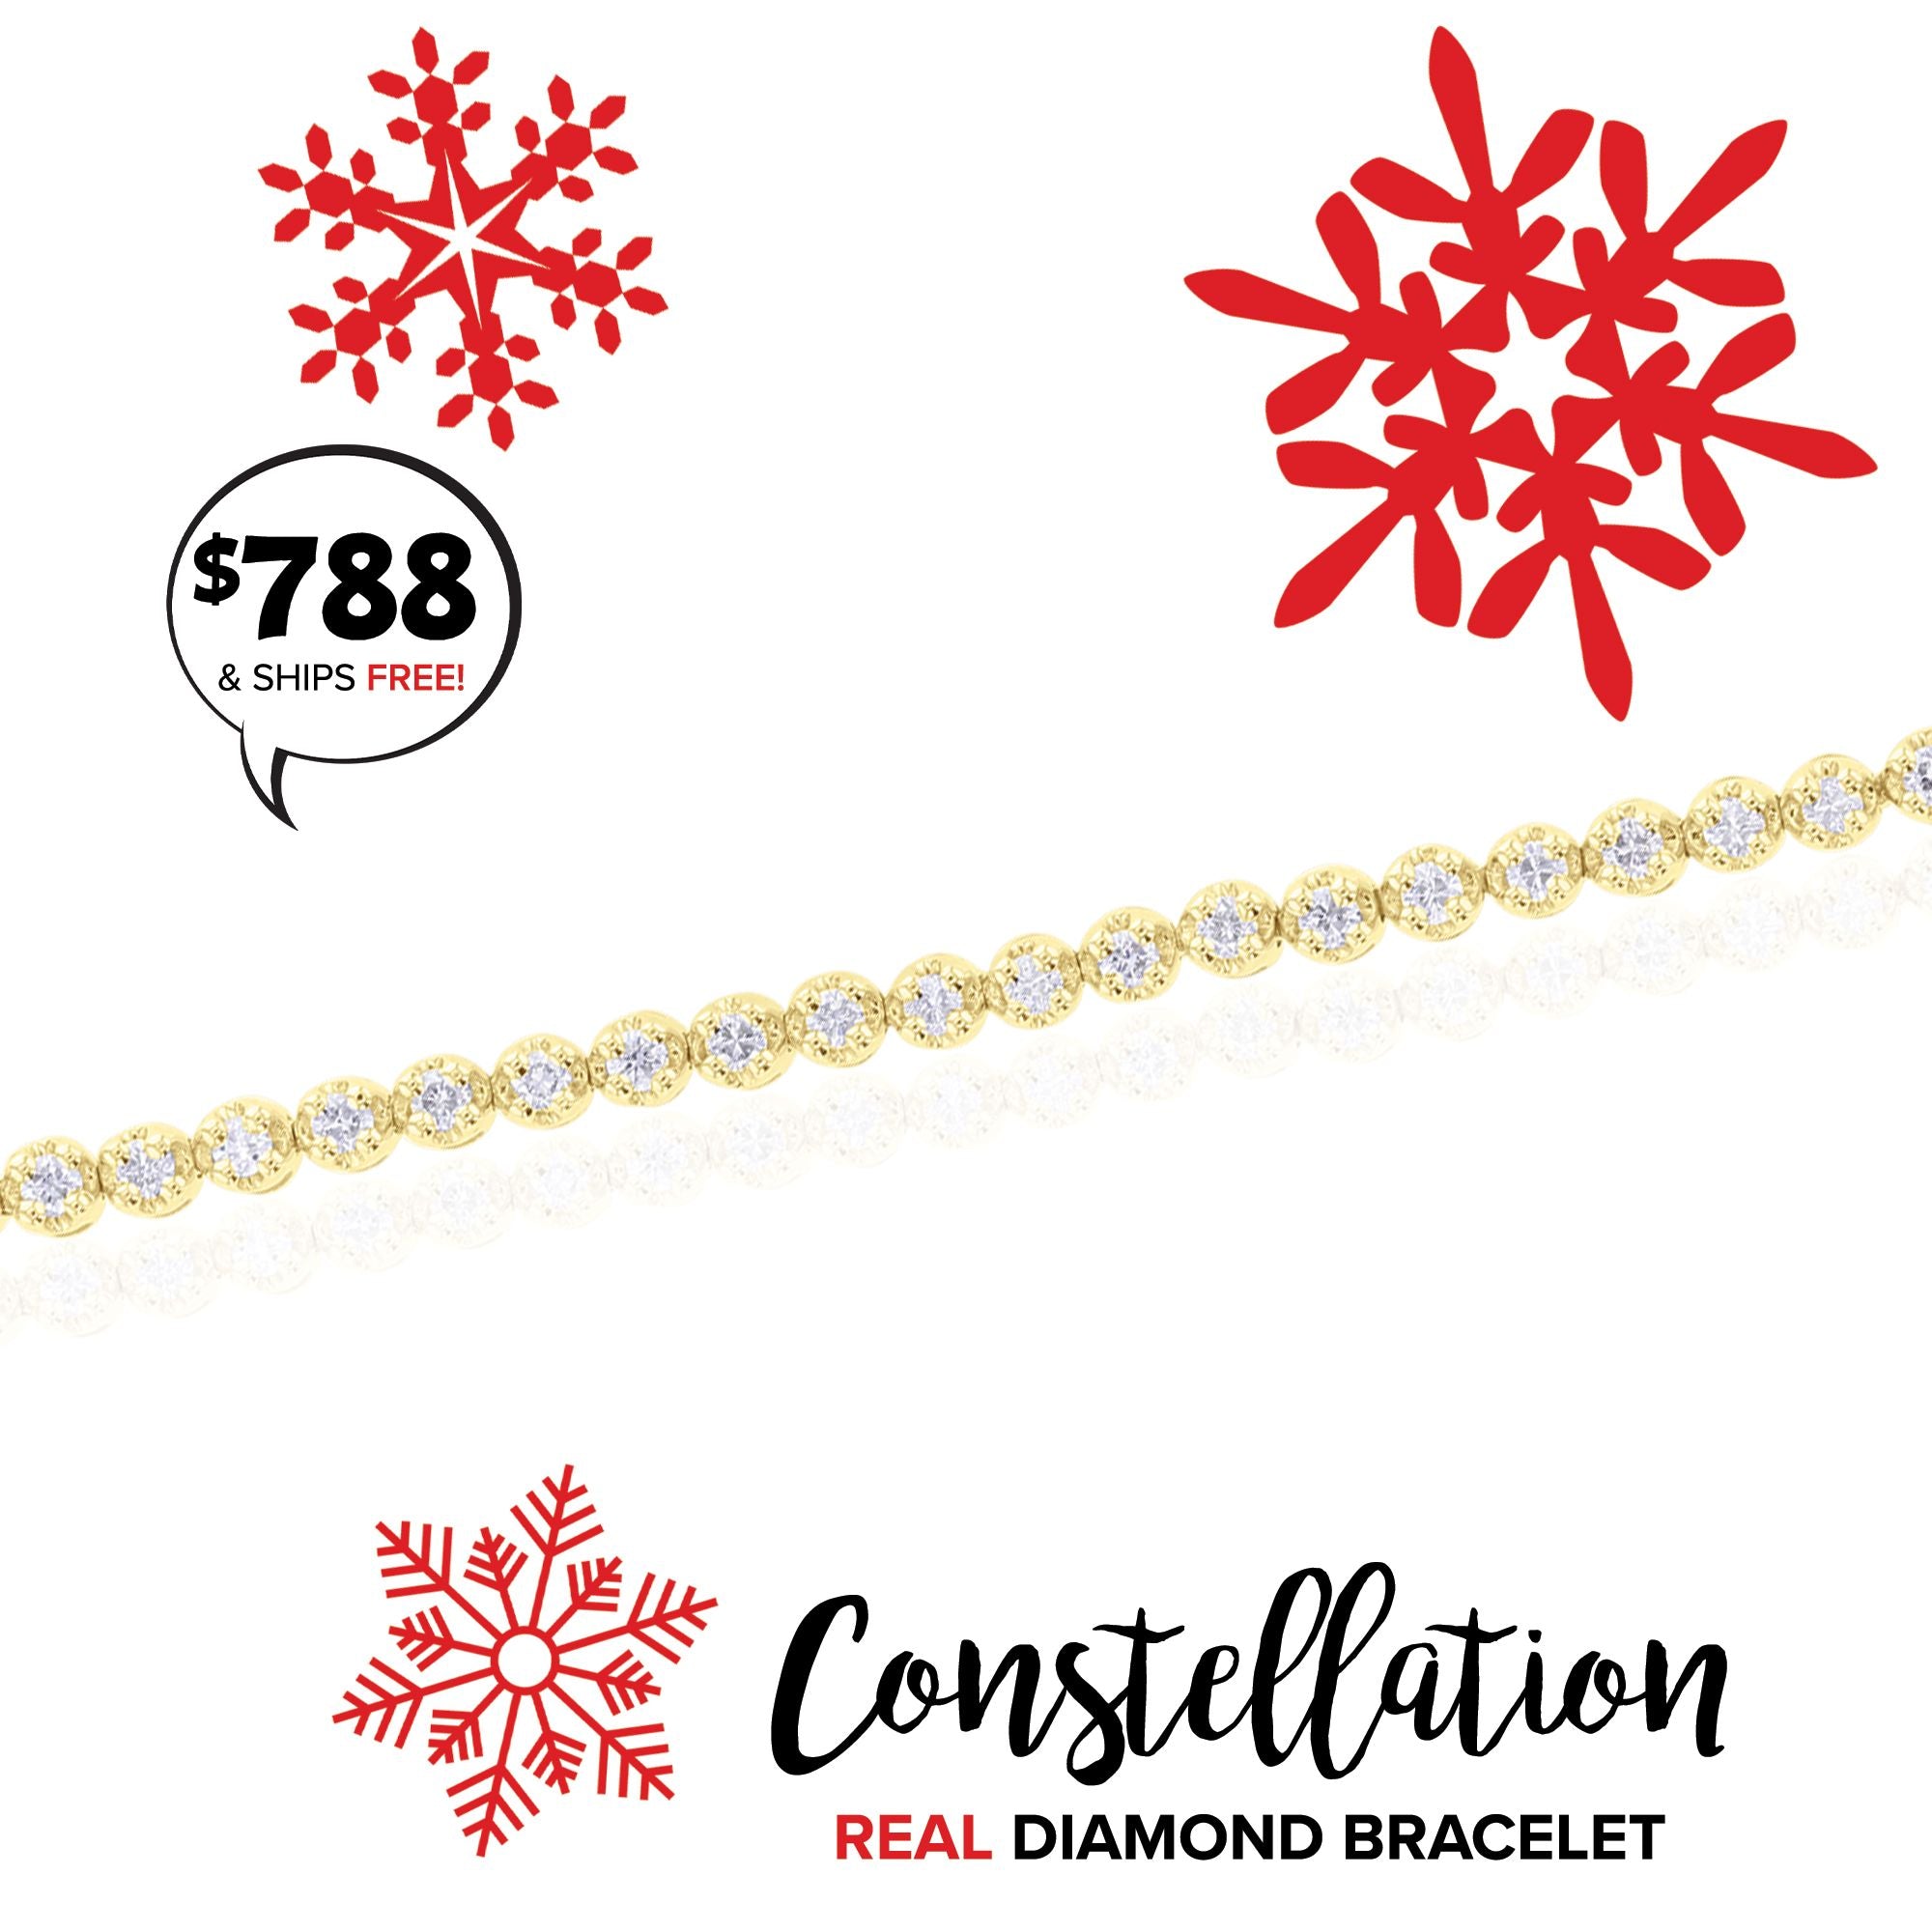 Constellation Tennis Bracelet from Steven Singer Jewelers